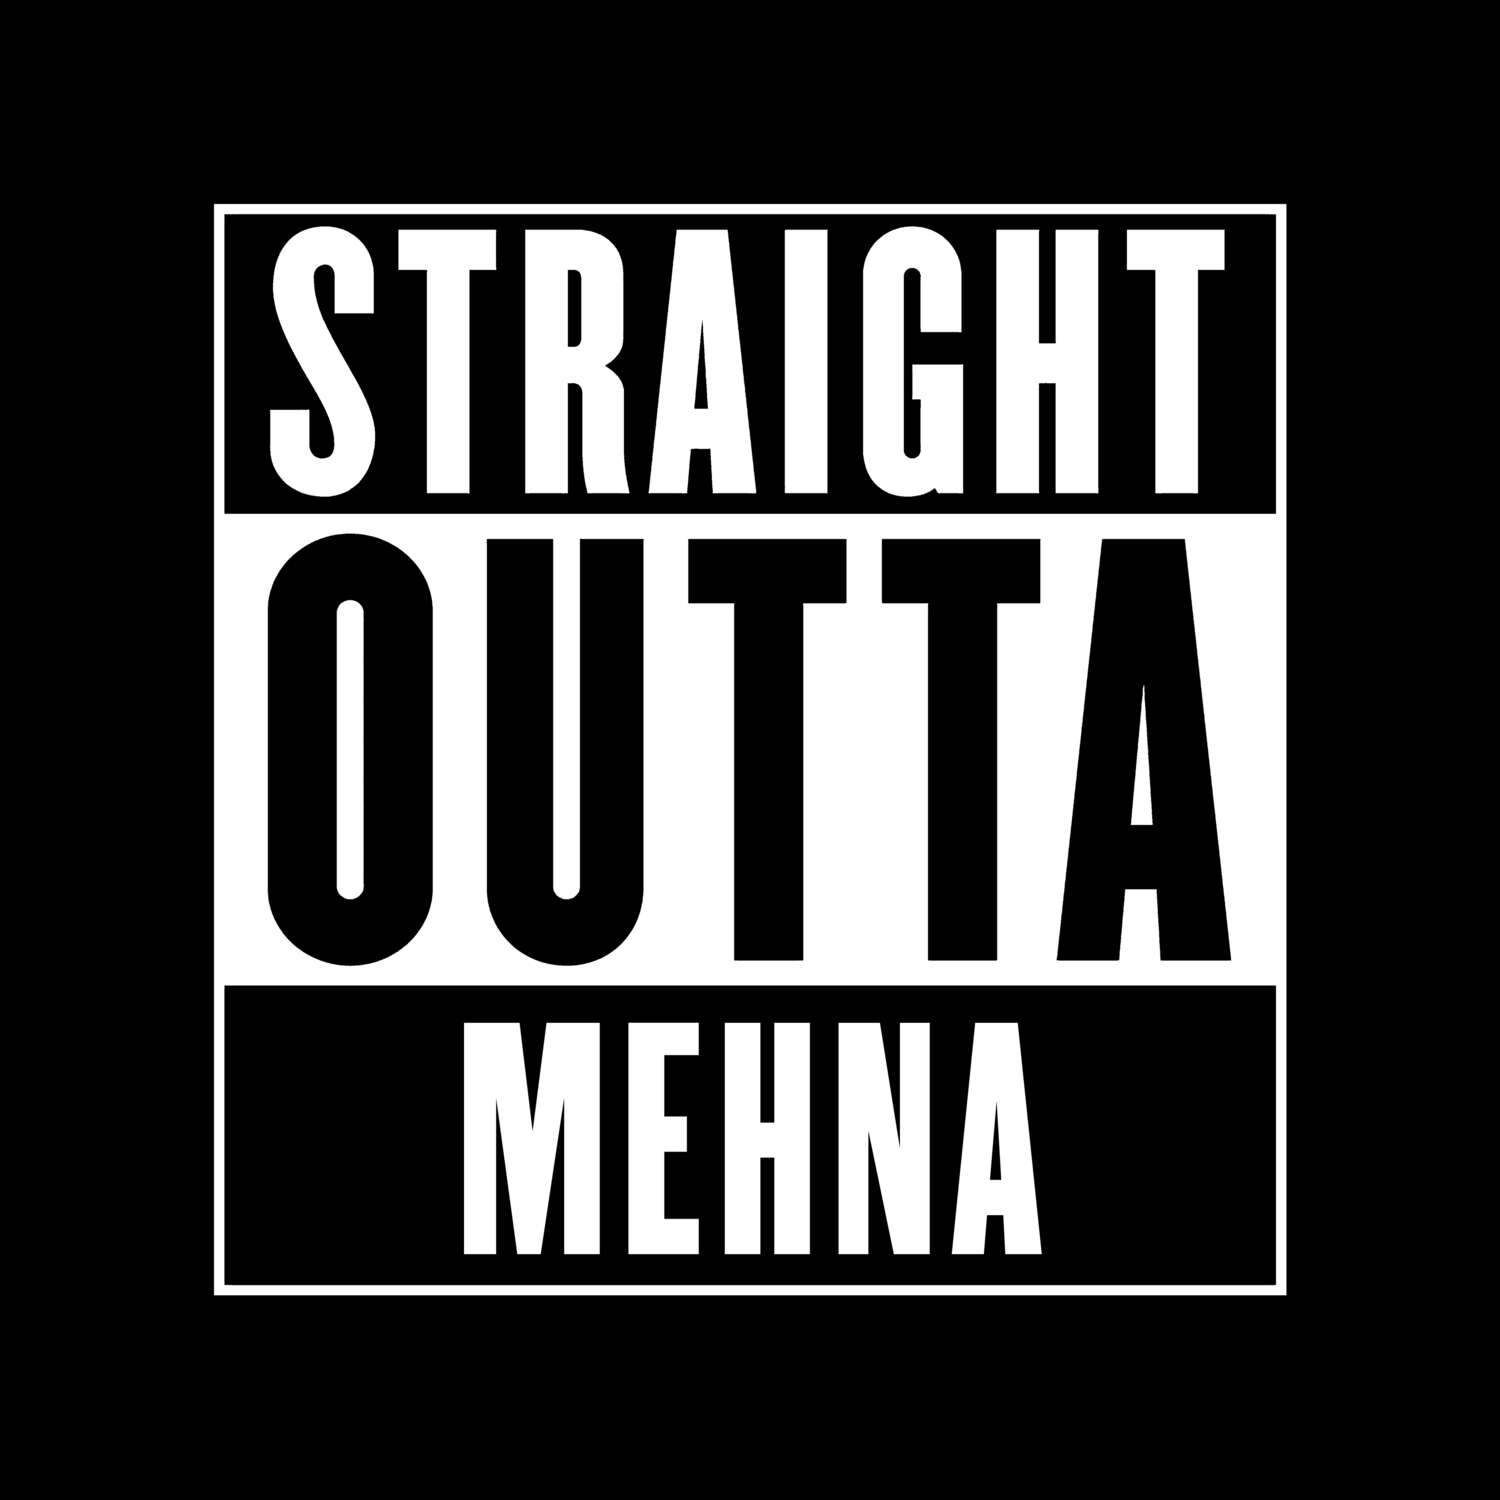 Mehna T-Shirt »Straight Outta«